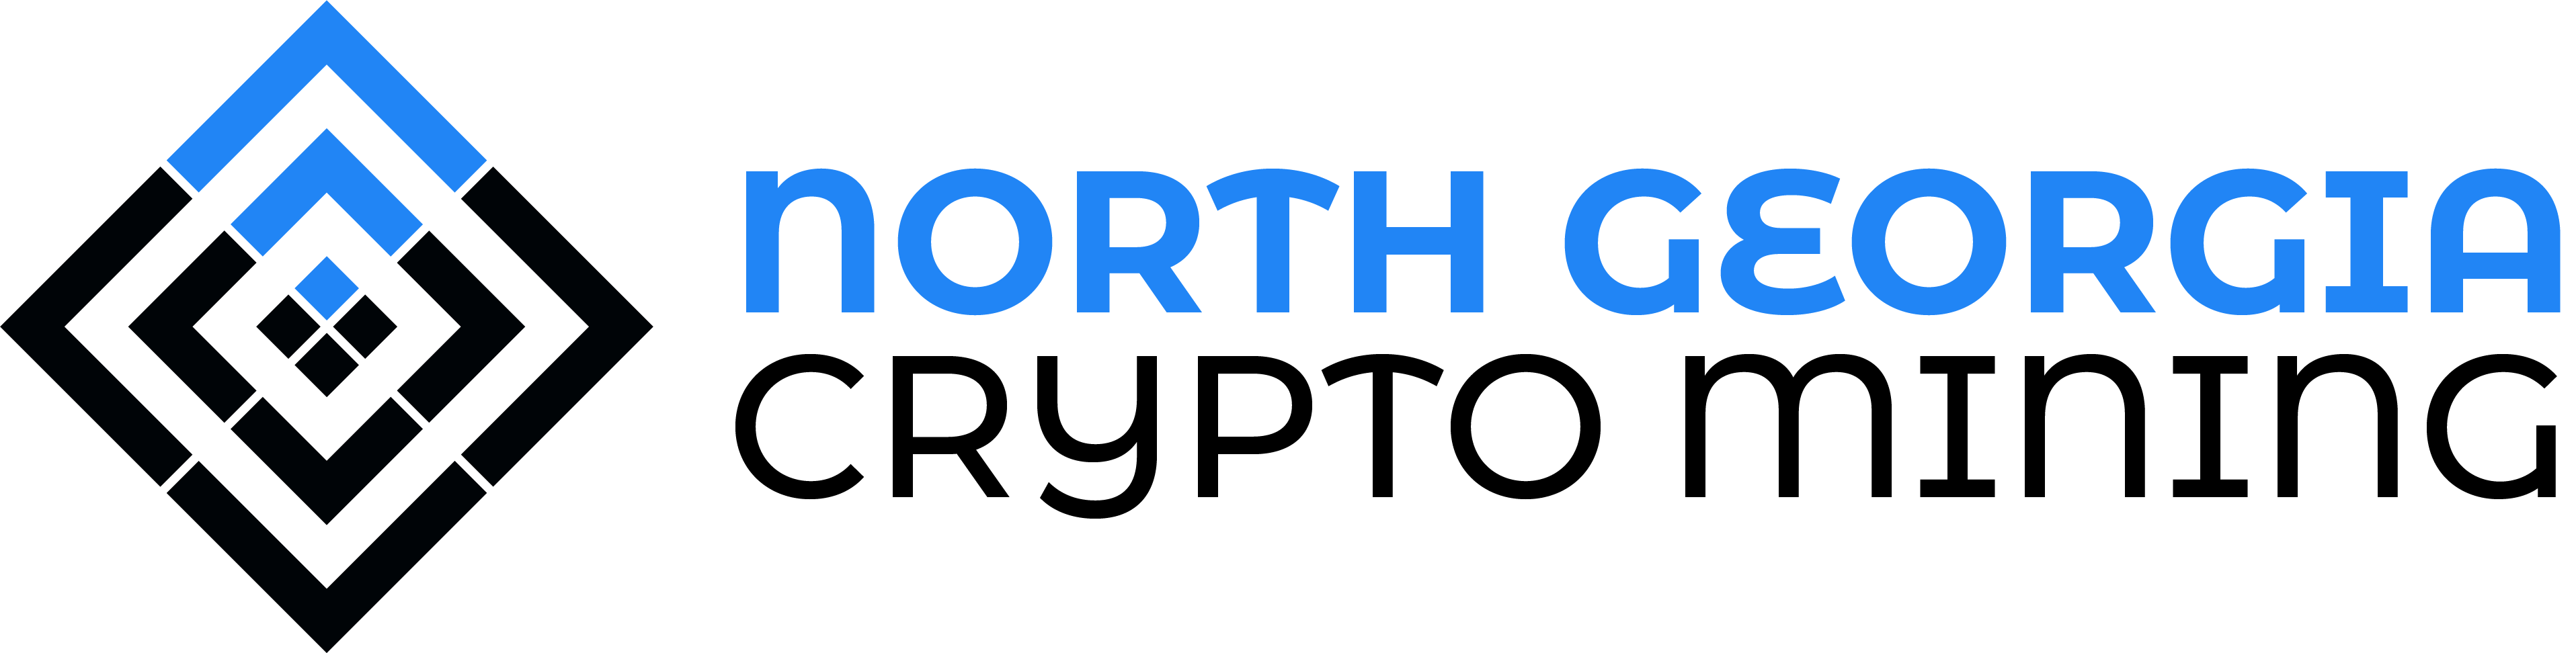 north georgia crypto mining